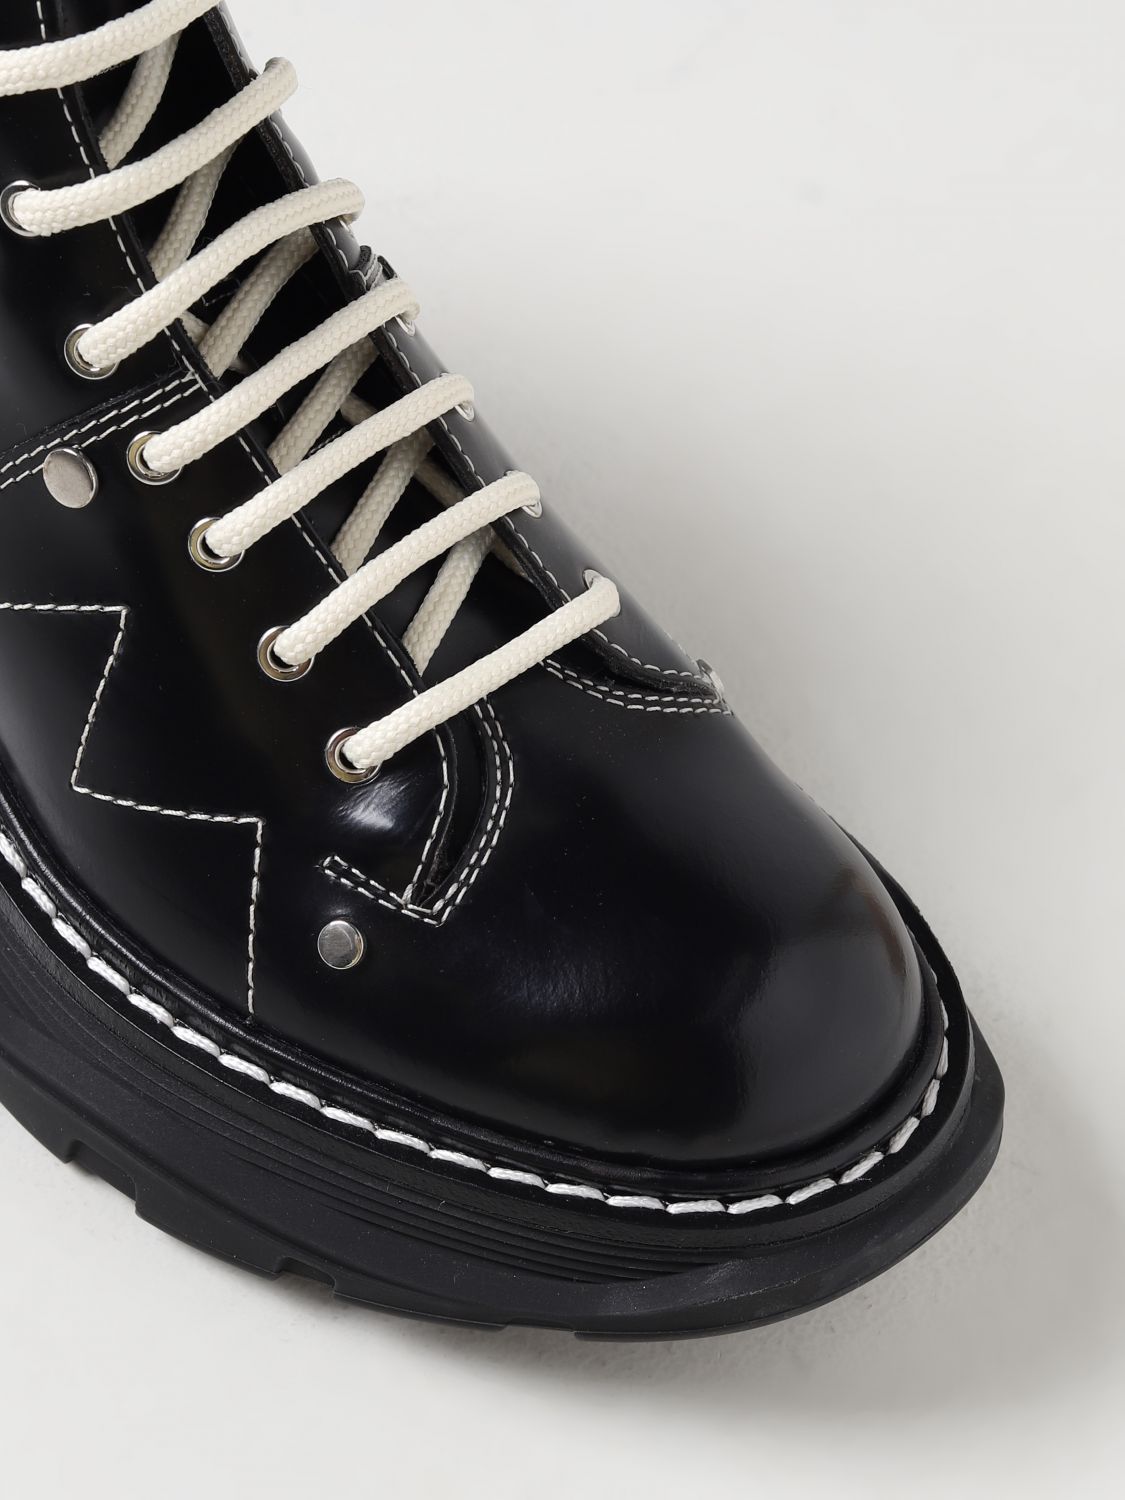 Shop alexander mcqueen Boots Boots (595469WHZ811090, 595469WHZ81 1090,  595469WHZ81, 595469 WHZ81 1090, 595469 WHZ81, BLACK LEATHER TREAD ANKLE  BOOTS) by CiaoItalia